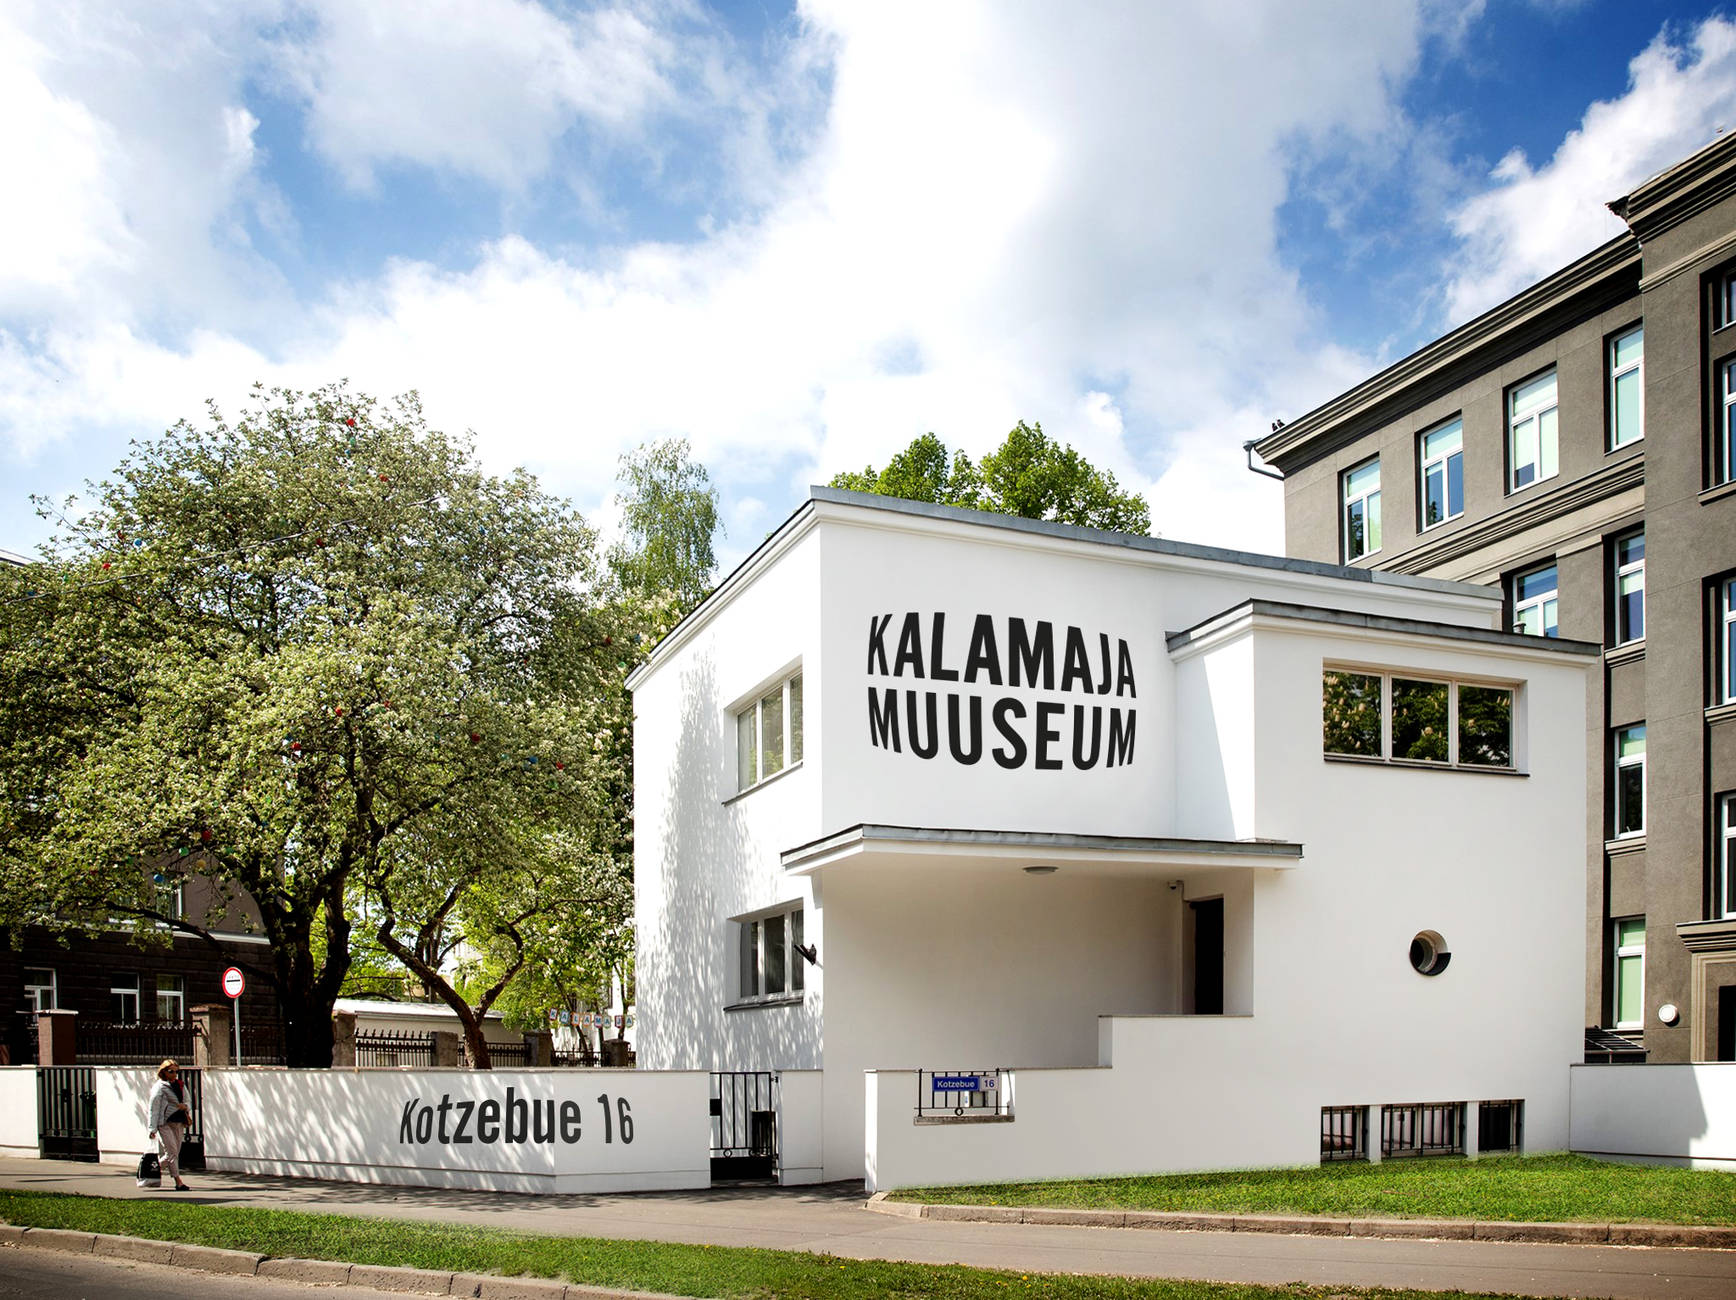  Фотография: Kalamaja Museum / Tallinn City Museum